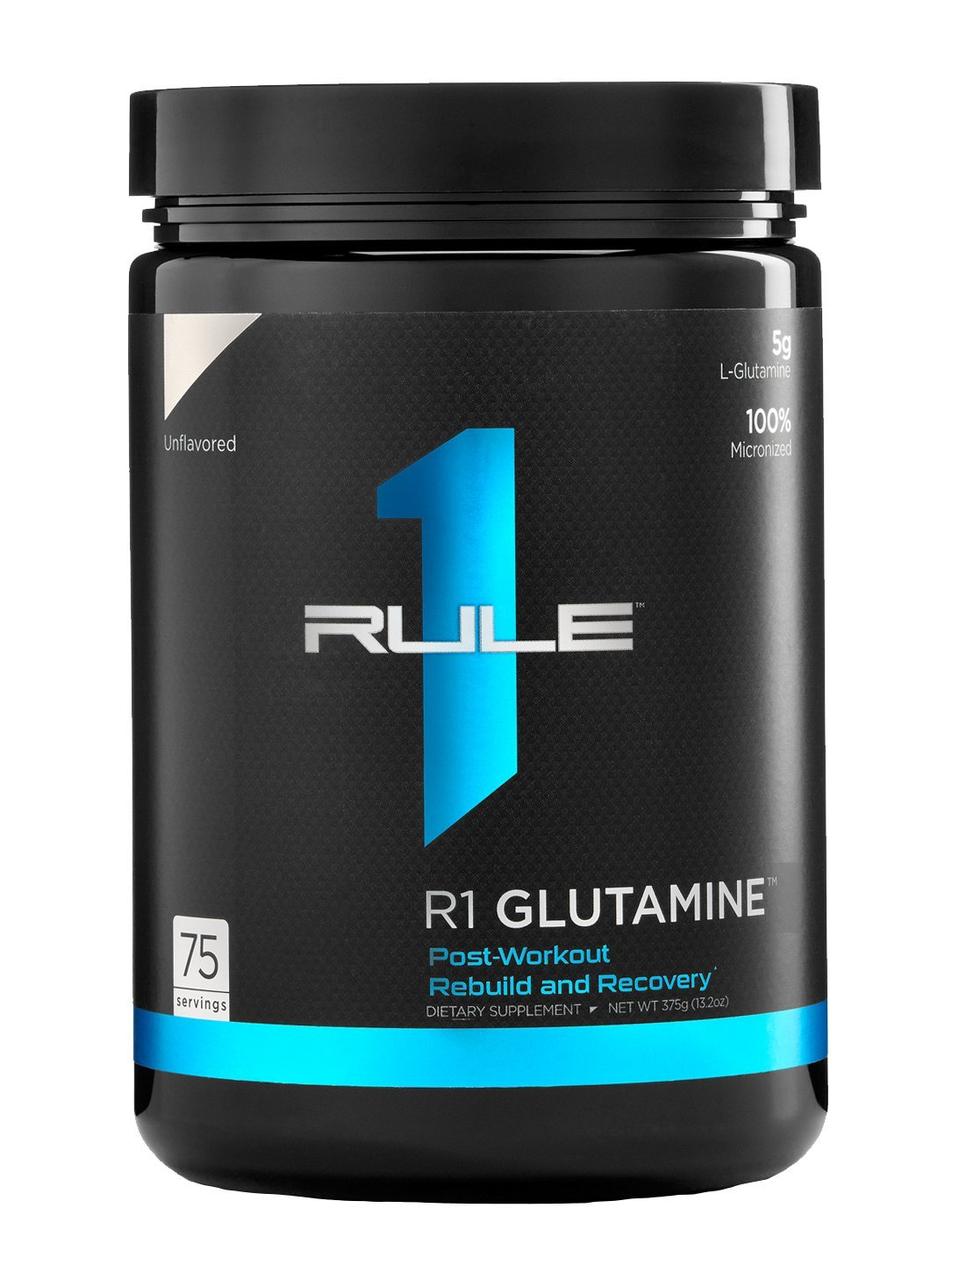 Глютамін Rule One Proteins Glutamine 375 g,  мл, Rule One Proteins. Глютамин. Набор массы Восстановление Антикатаболические свойства 